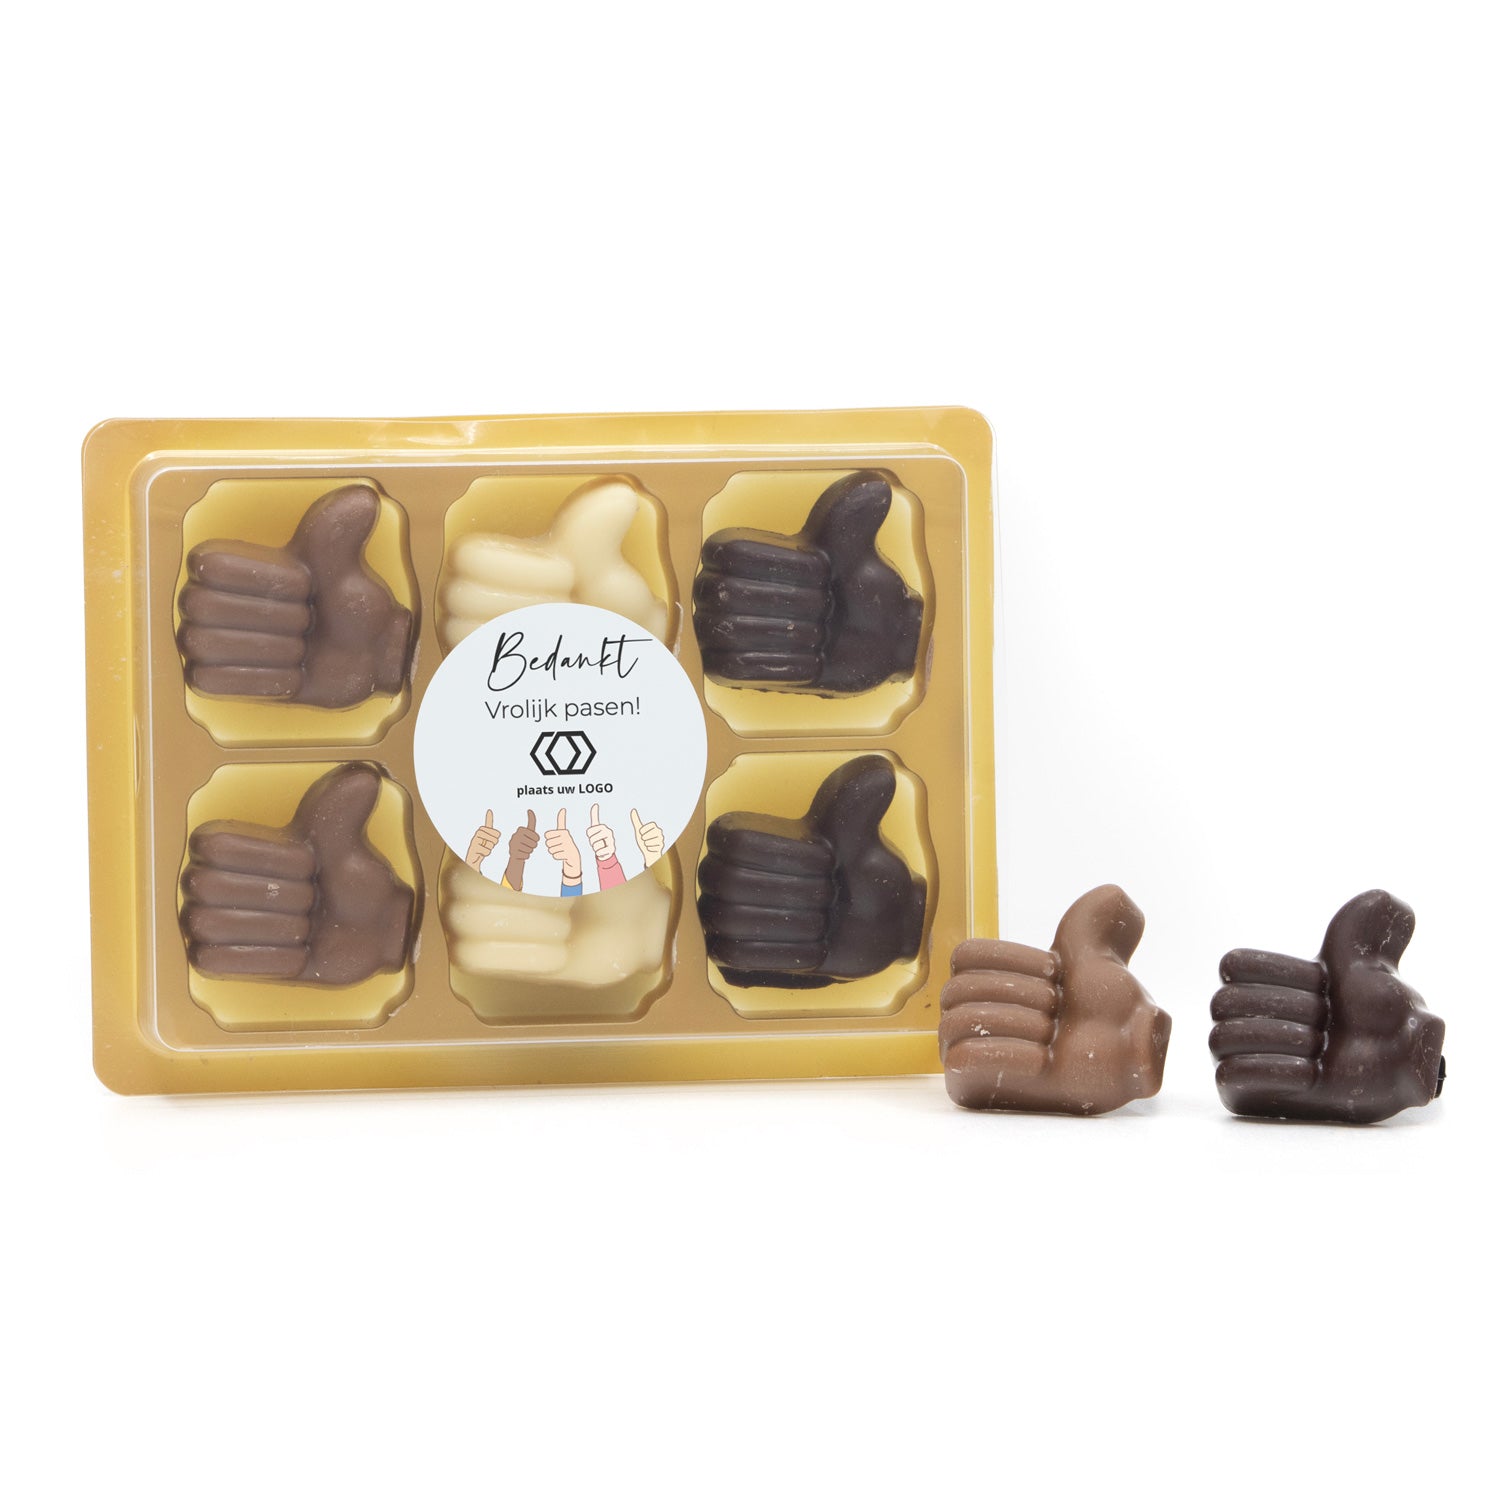 Chocolade duimpjes (6) Thumbs up - Pasen - Bedankjes.nl